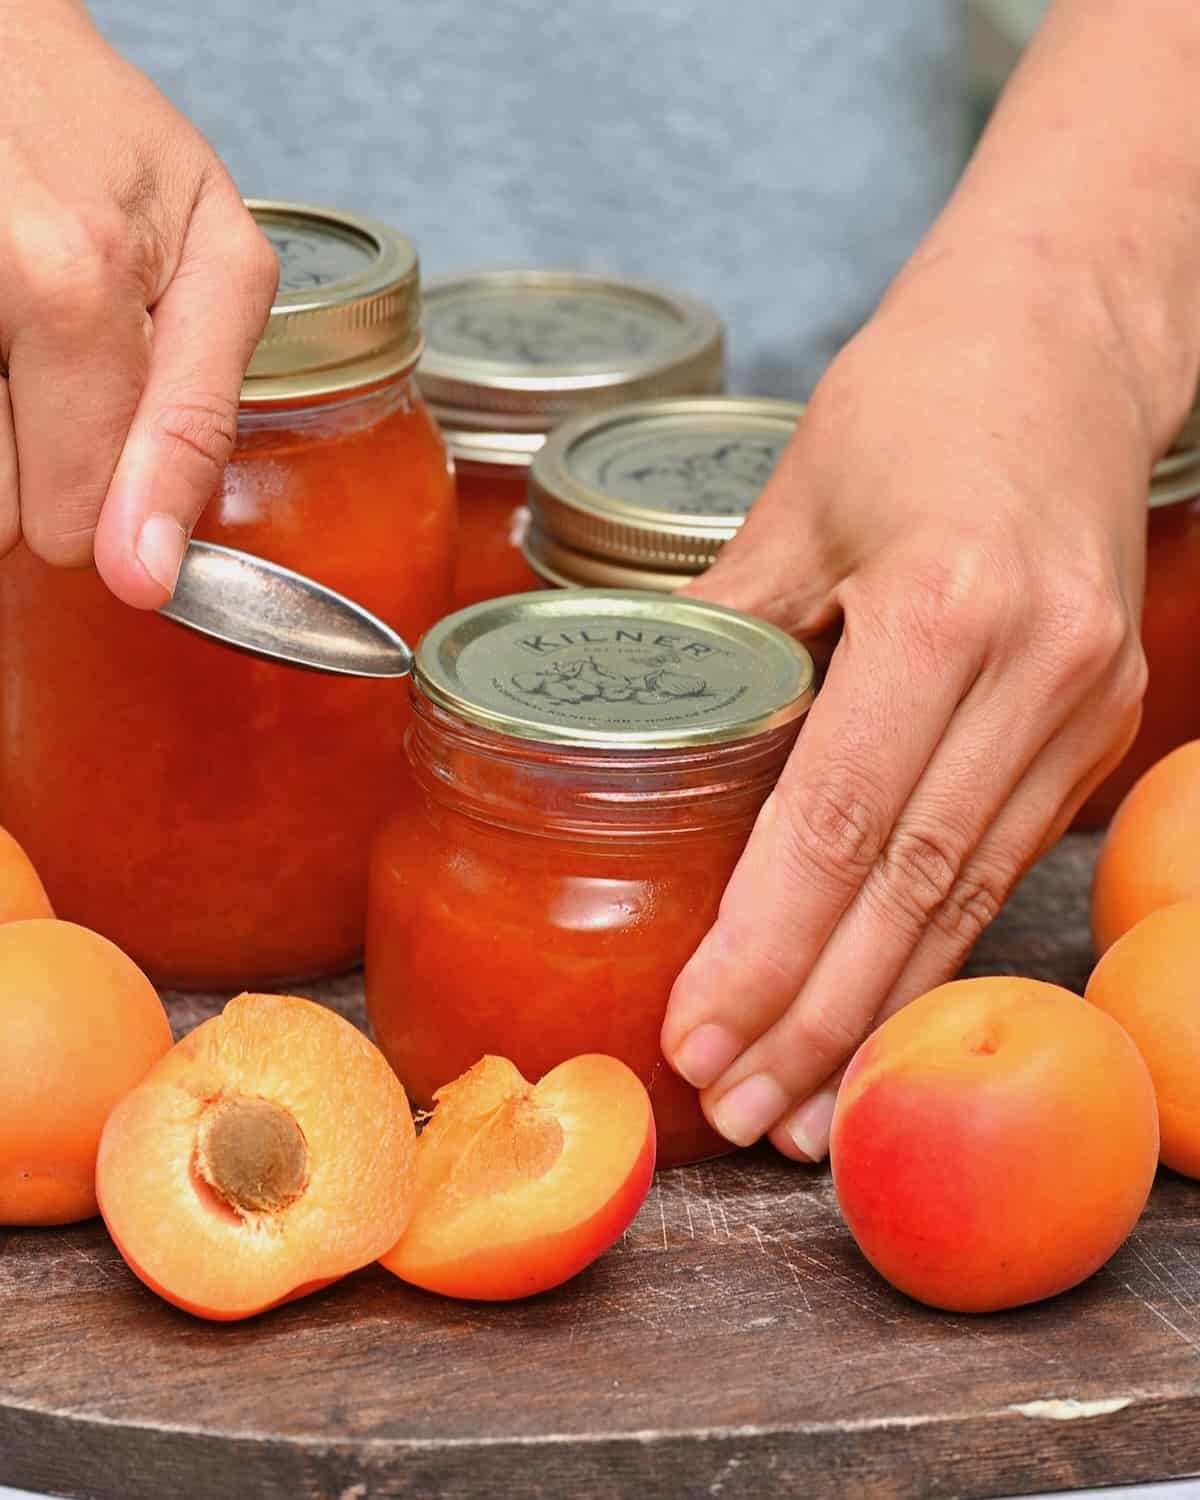 Opening a jar of homemade jam